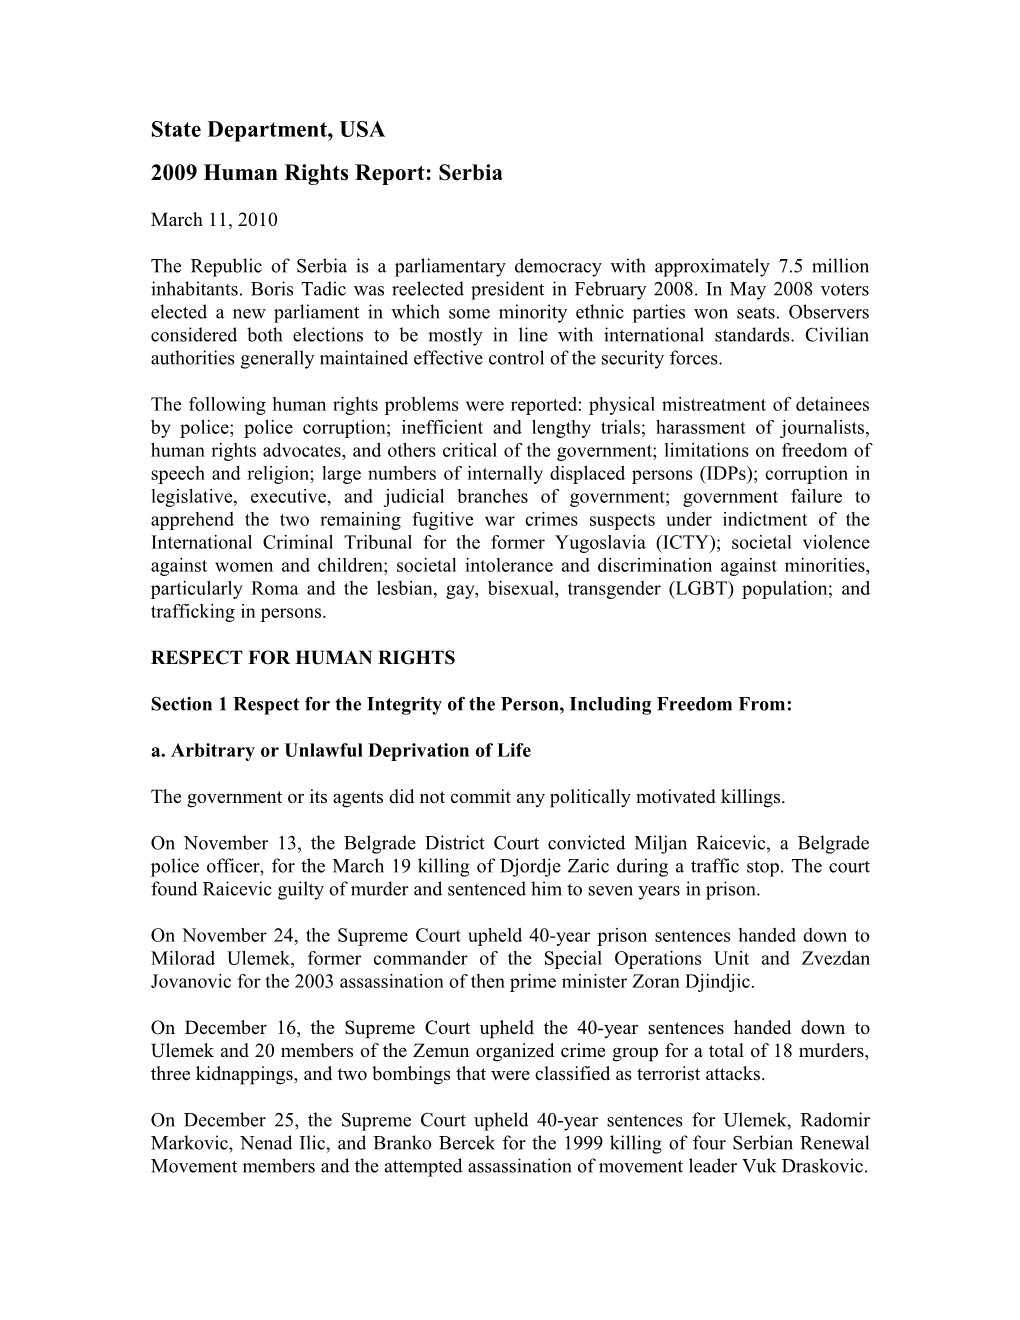 2009 Human Rights Report: Serbia